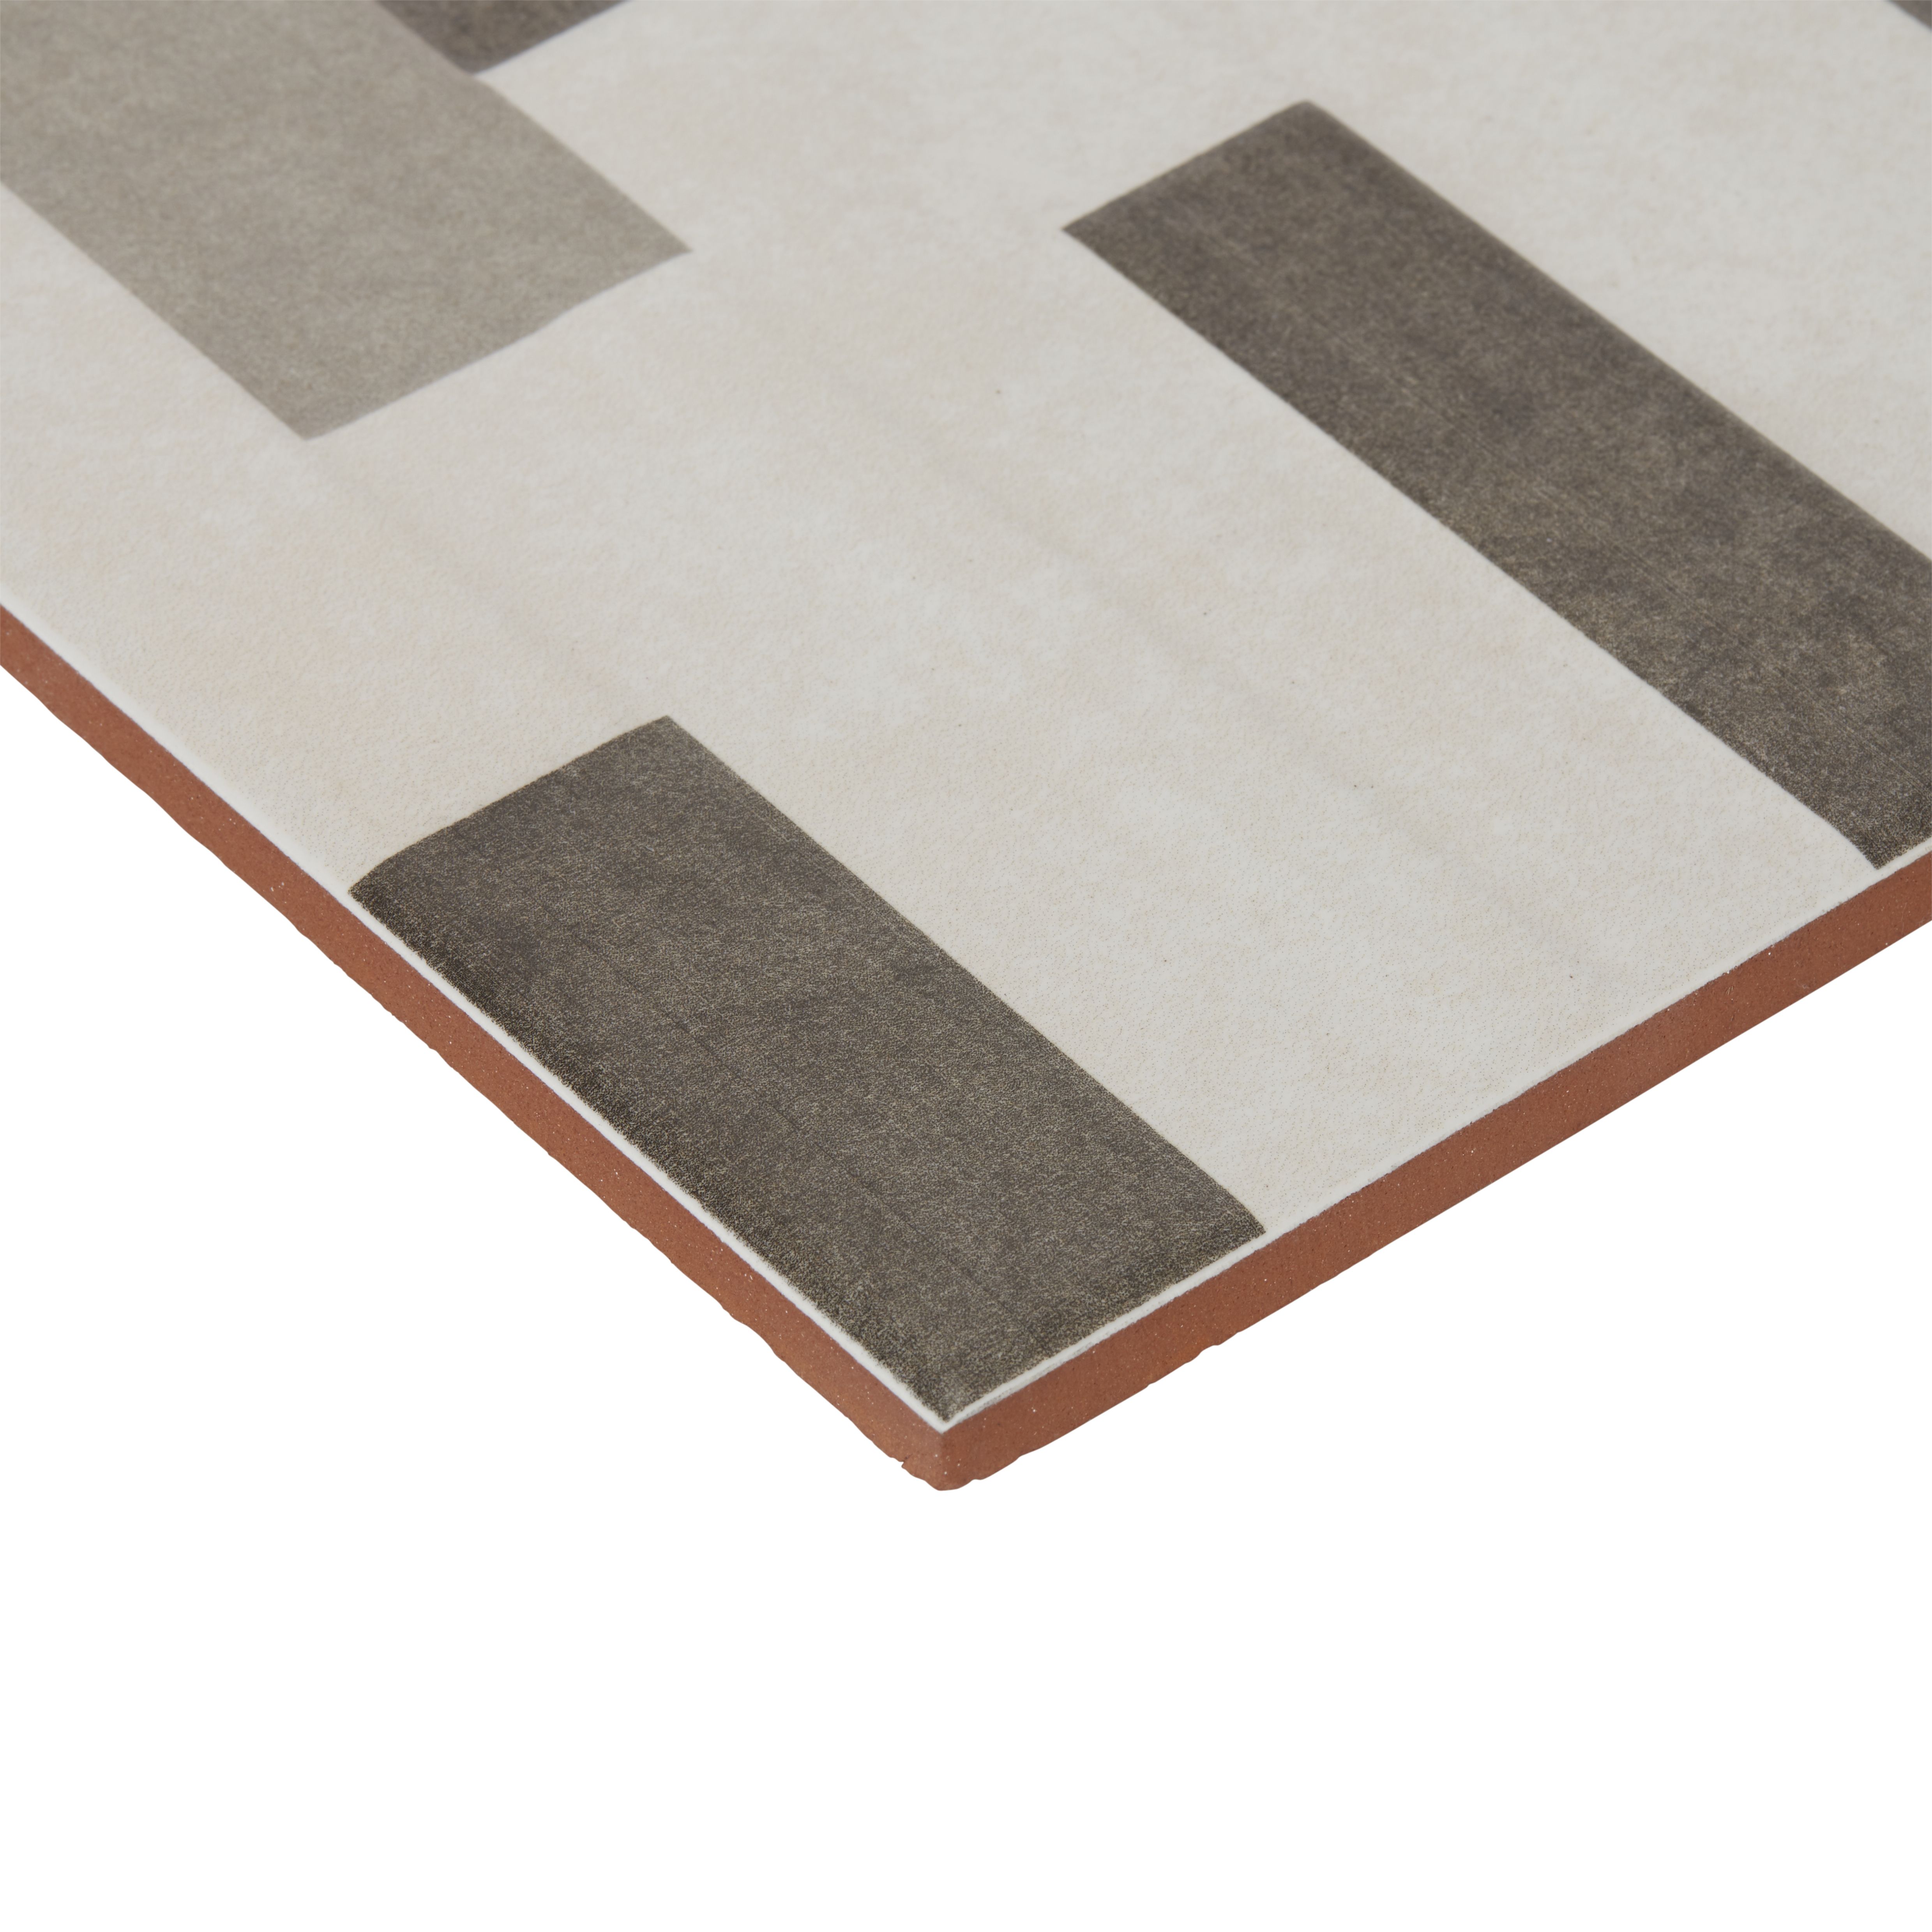 Cimenti Dove Matt Decor Ceramic Indoor Wall Tile, Pack of 10, (L)402.4mm (W)251.6mm